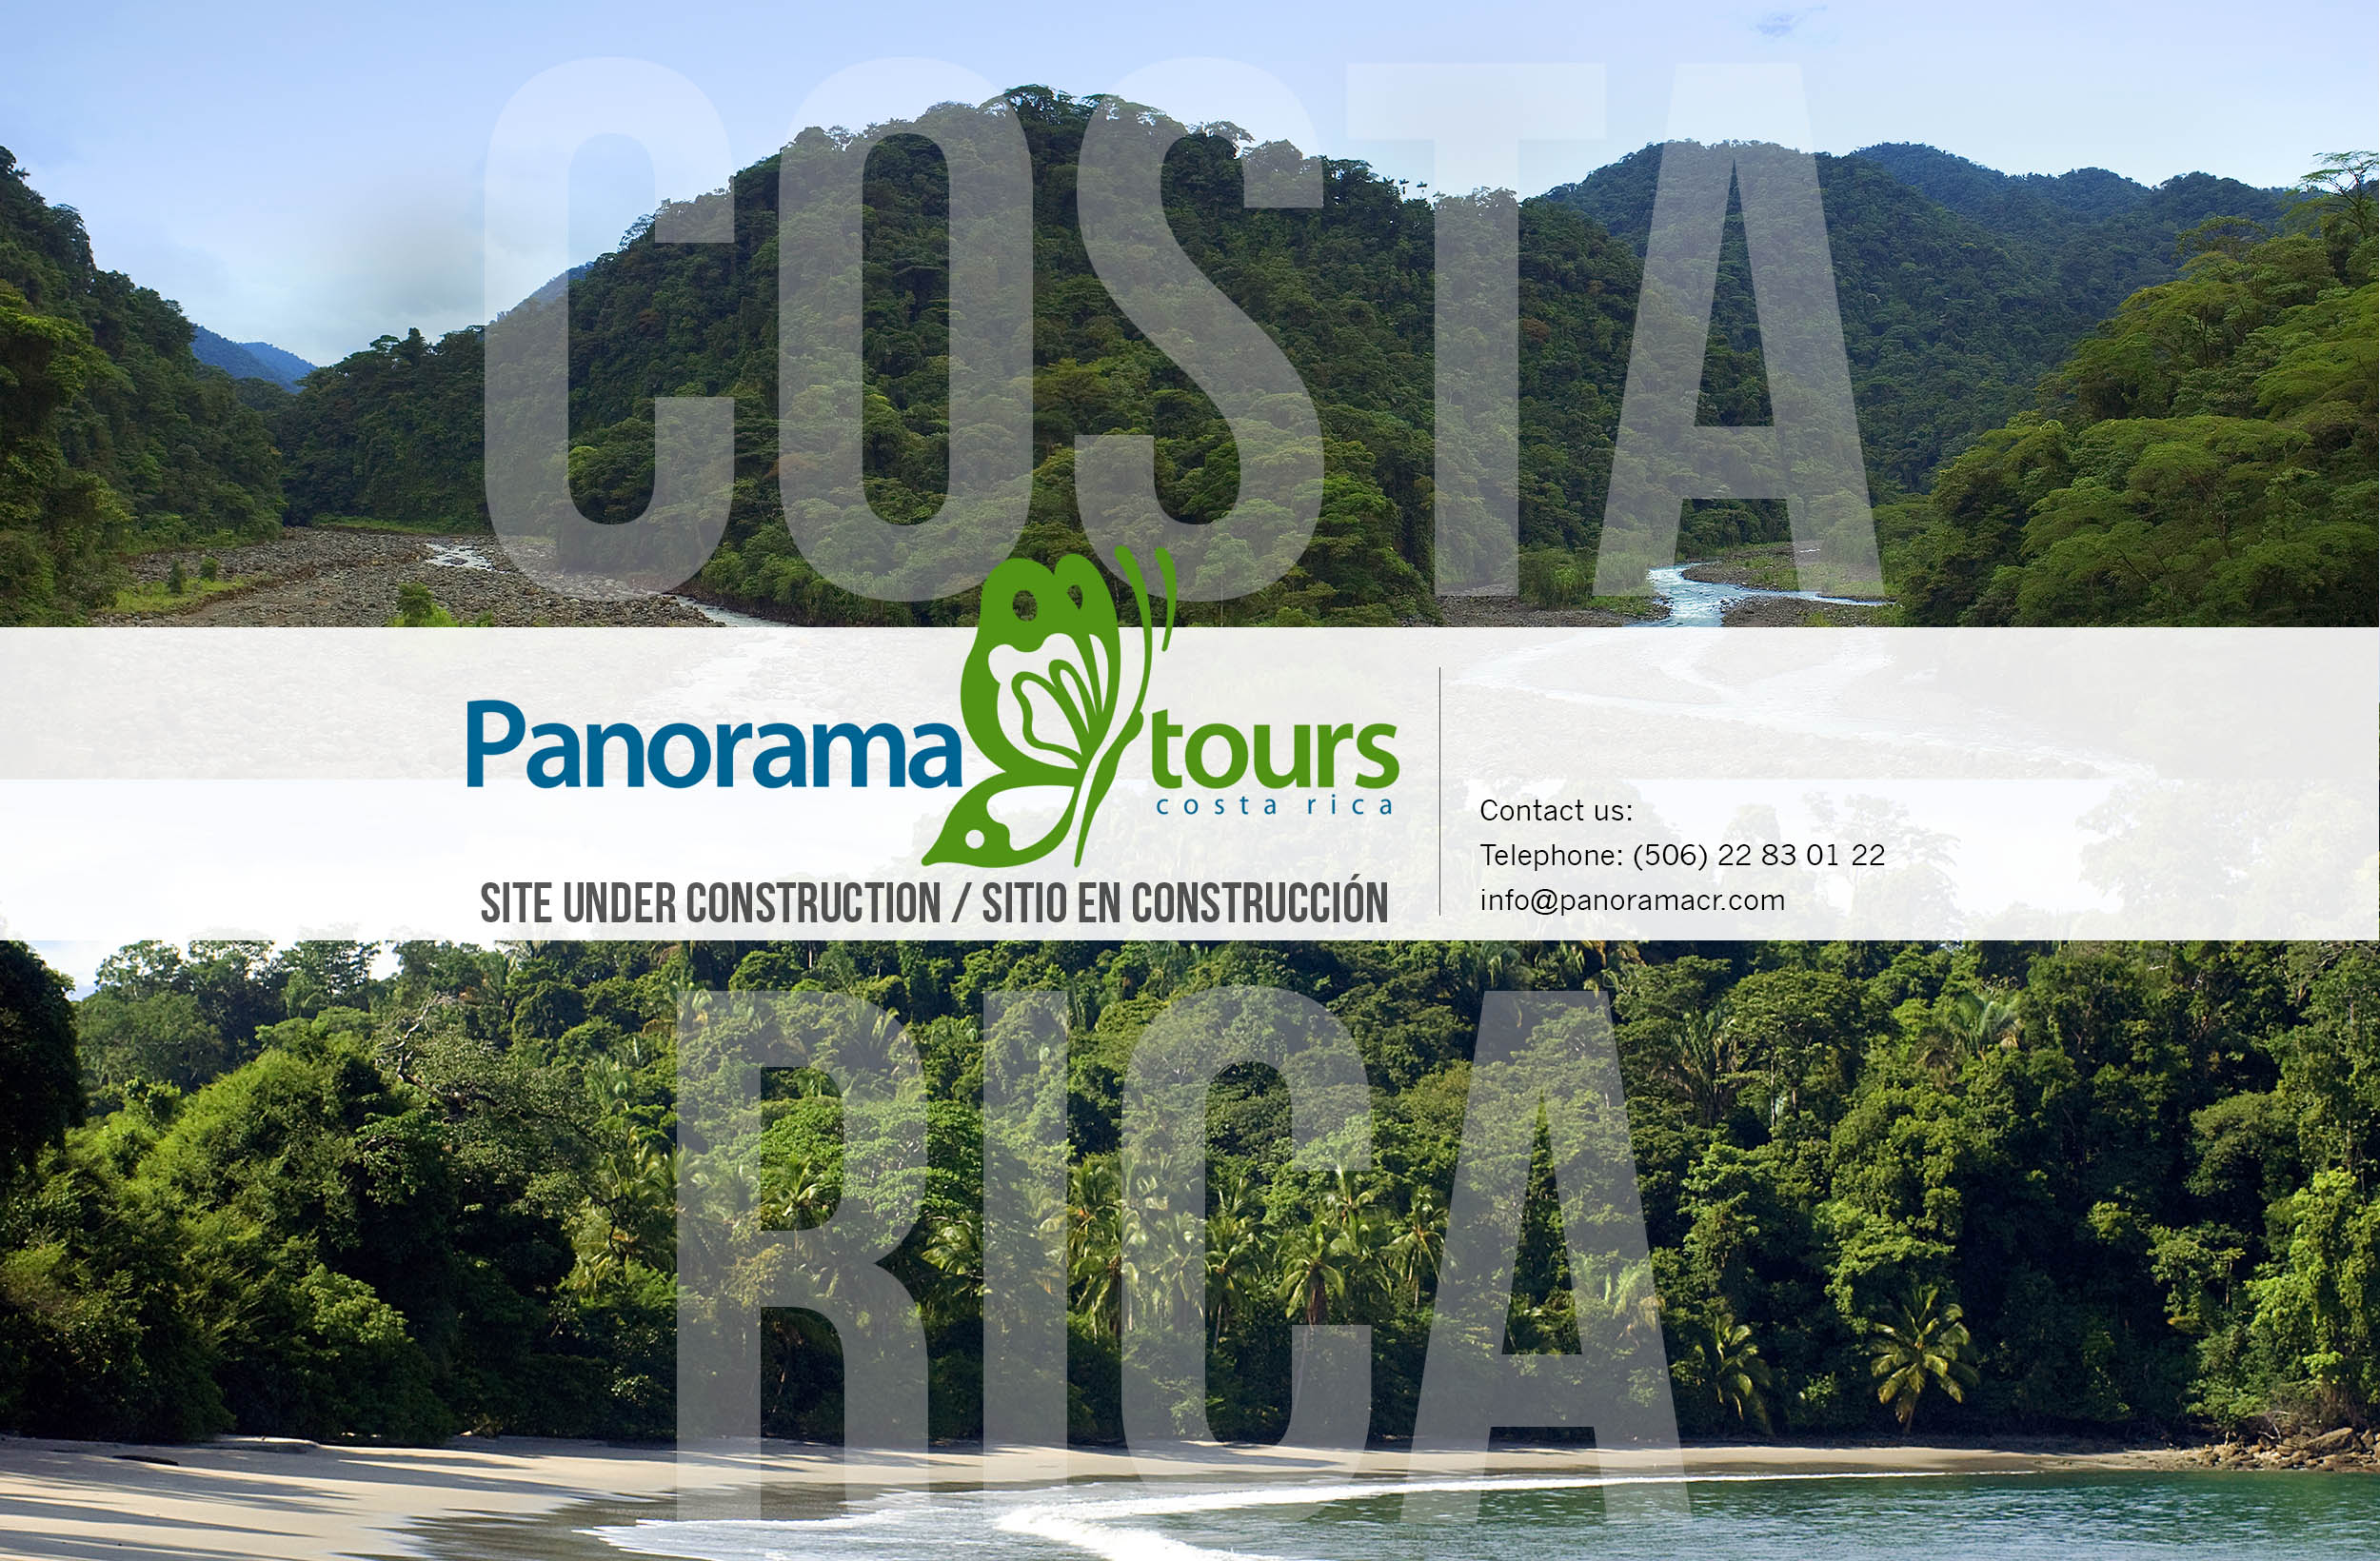 Panorama Tours, Costa Rica